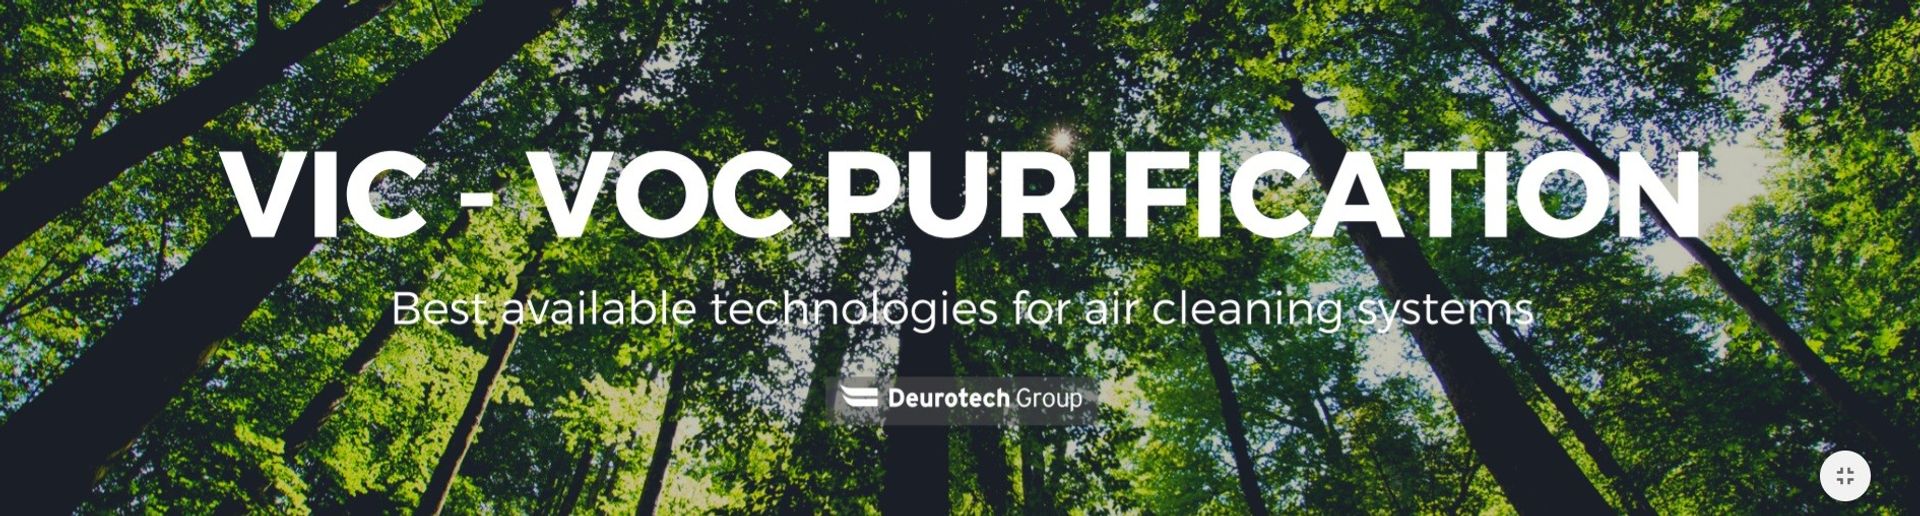 Airprotech - Deurotech Group